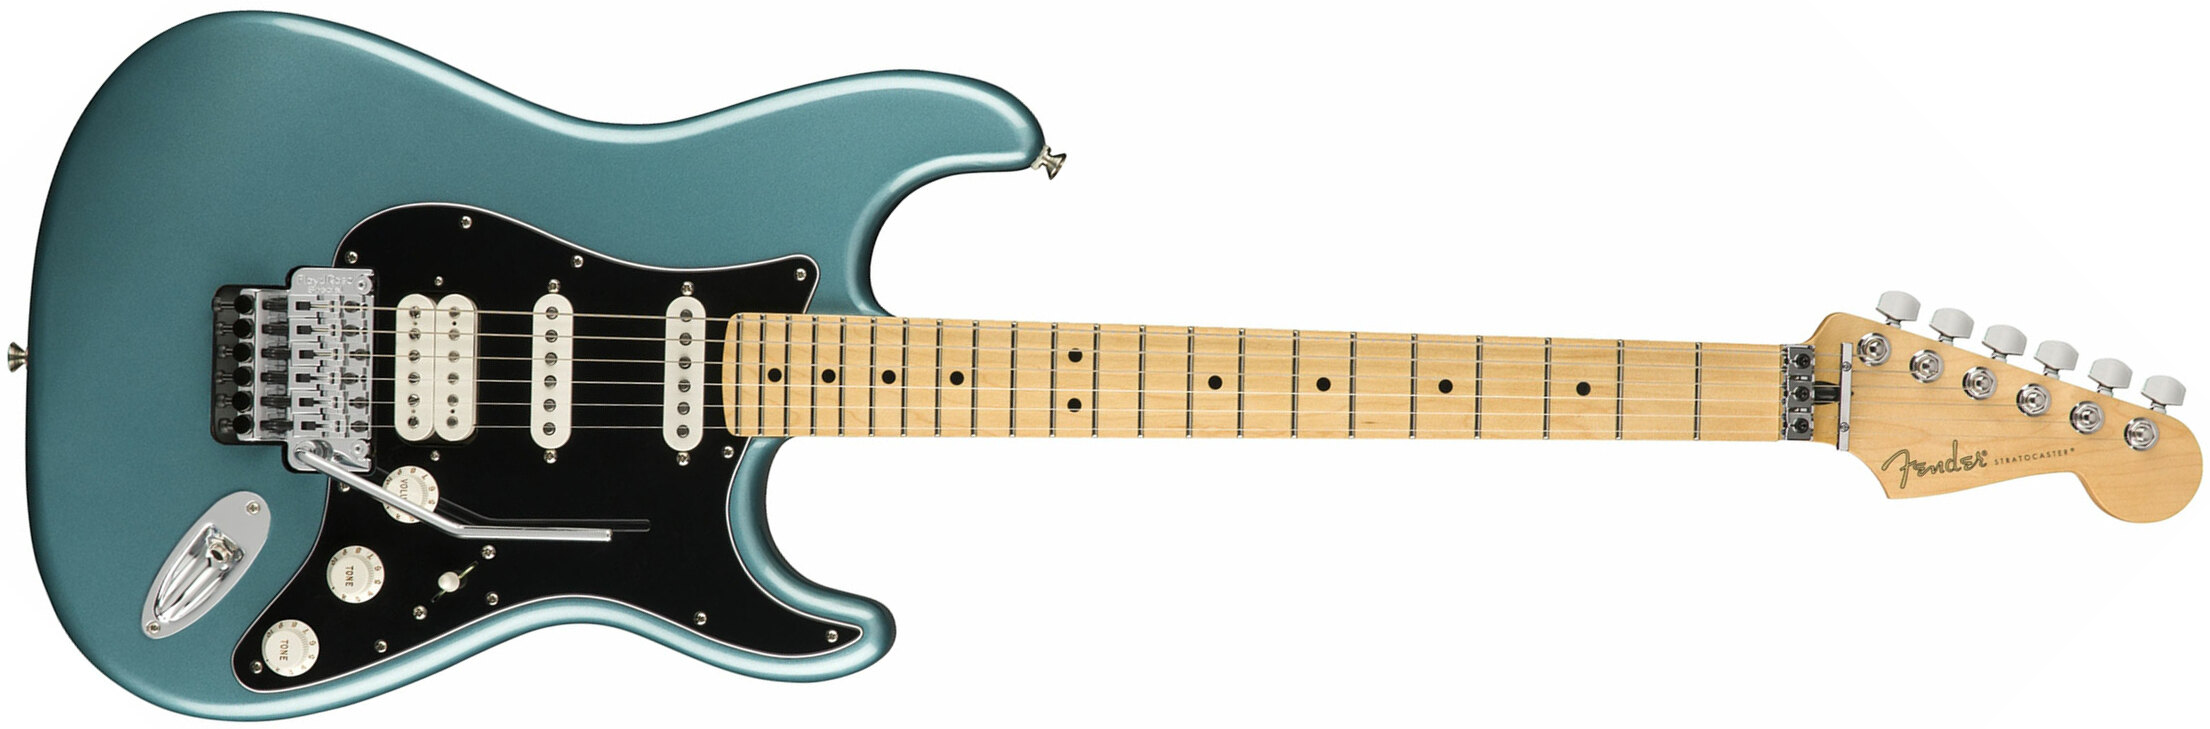 Fender Strat Player Floyd Rose Mex Hss Fr Mn - Tidepool - Str shape electric guitar - Main picture